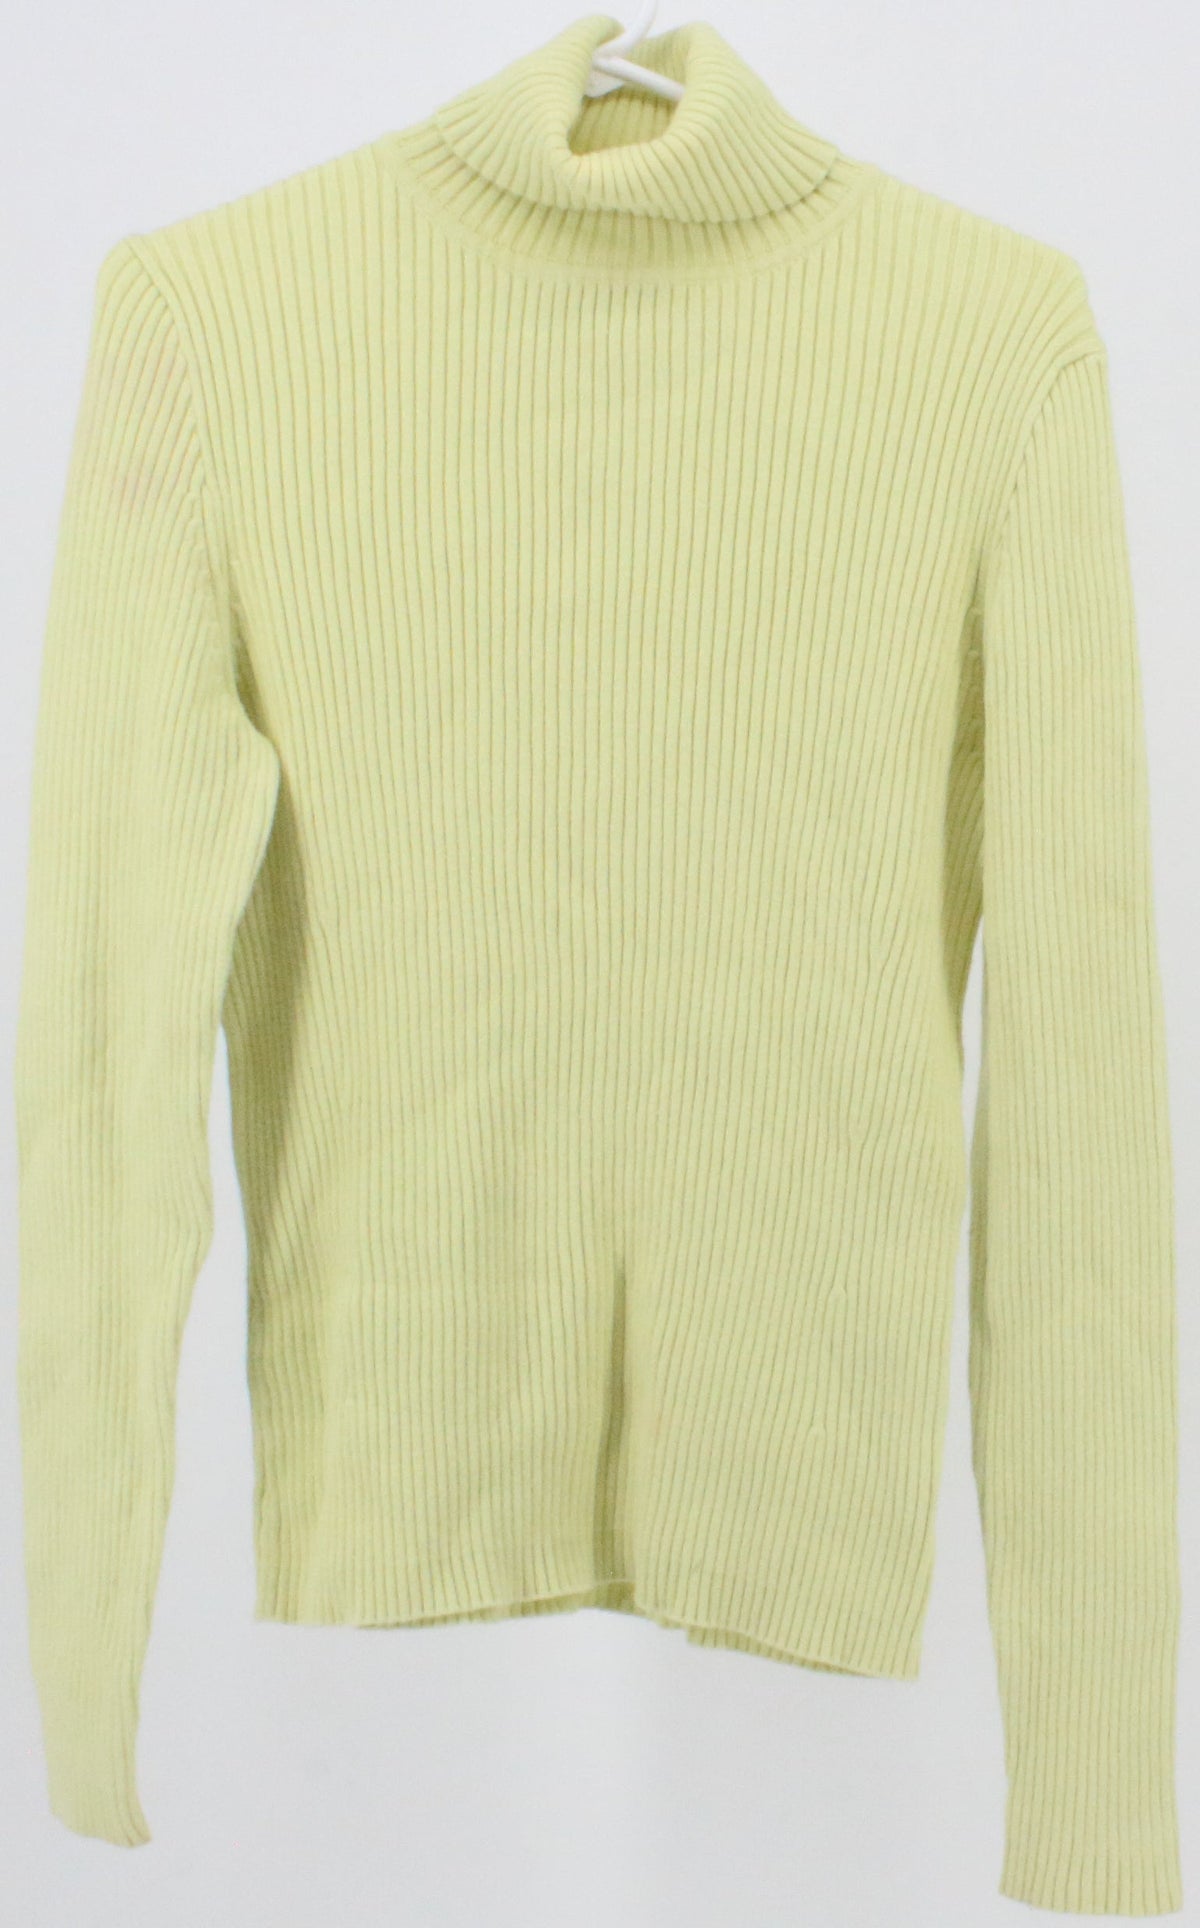 Gap Stretch Lime Turtleneck Sweater